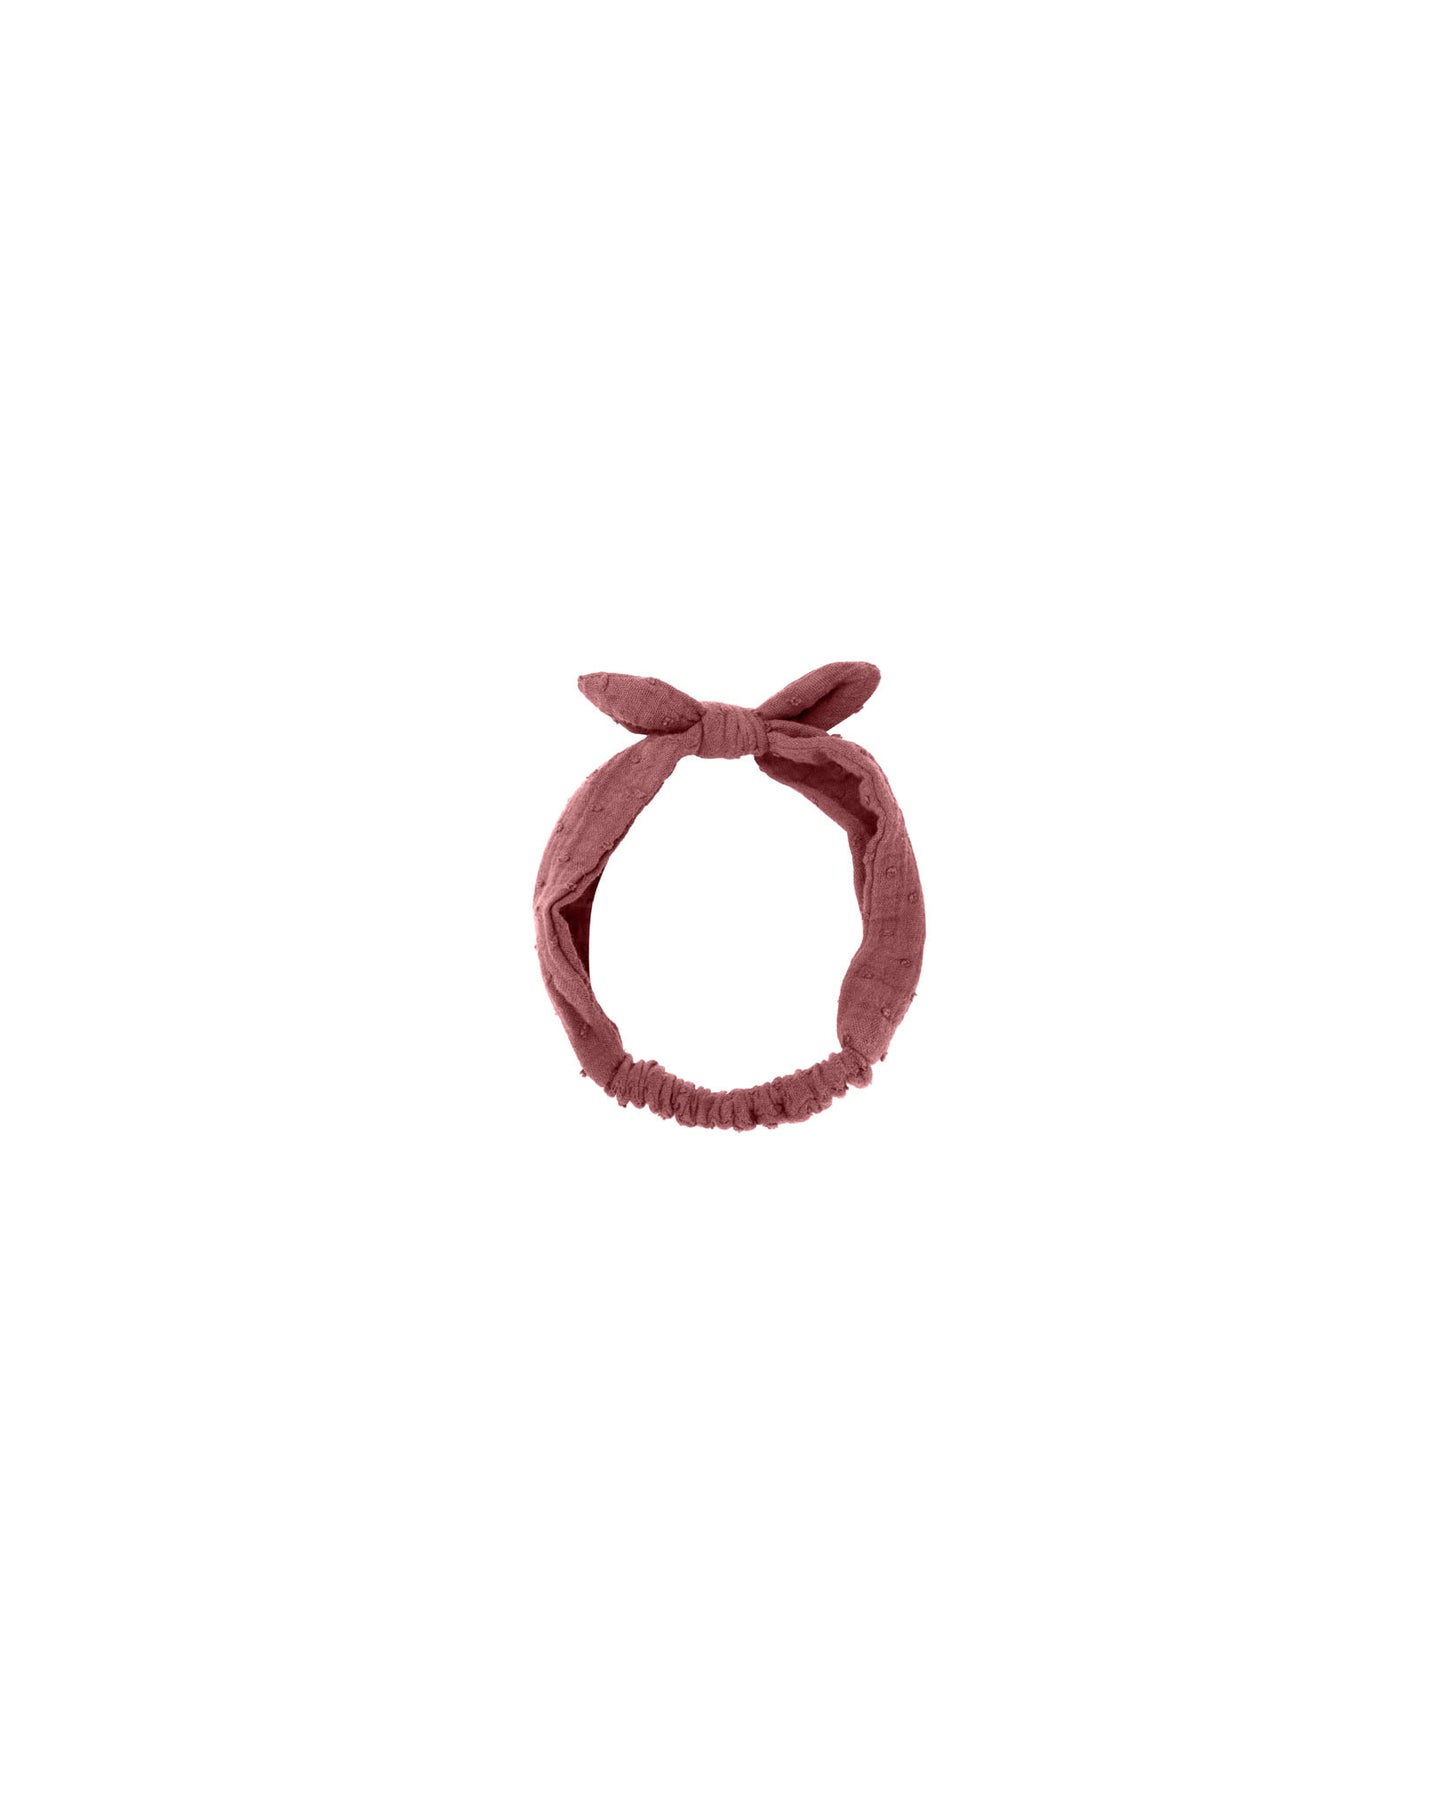 Rylee + Cru - Baby Bow Headband - Raspberry